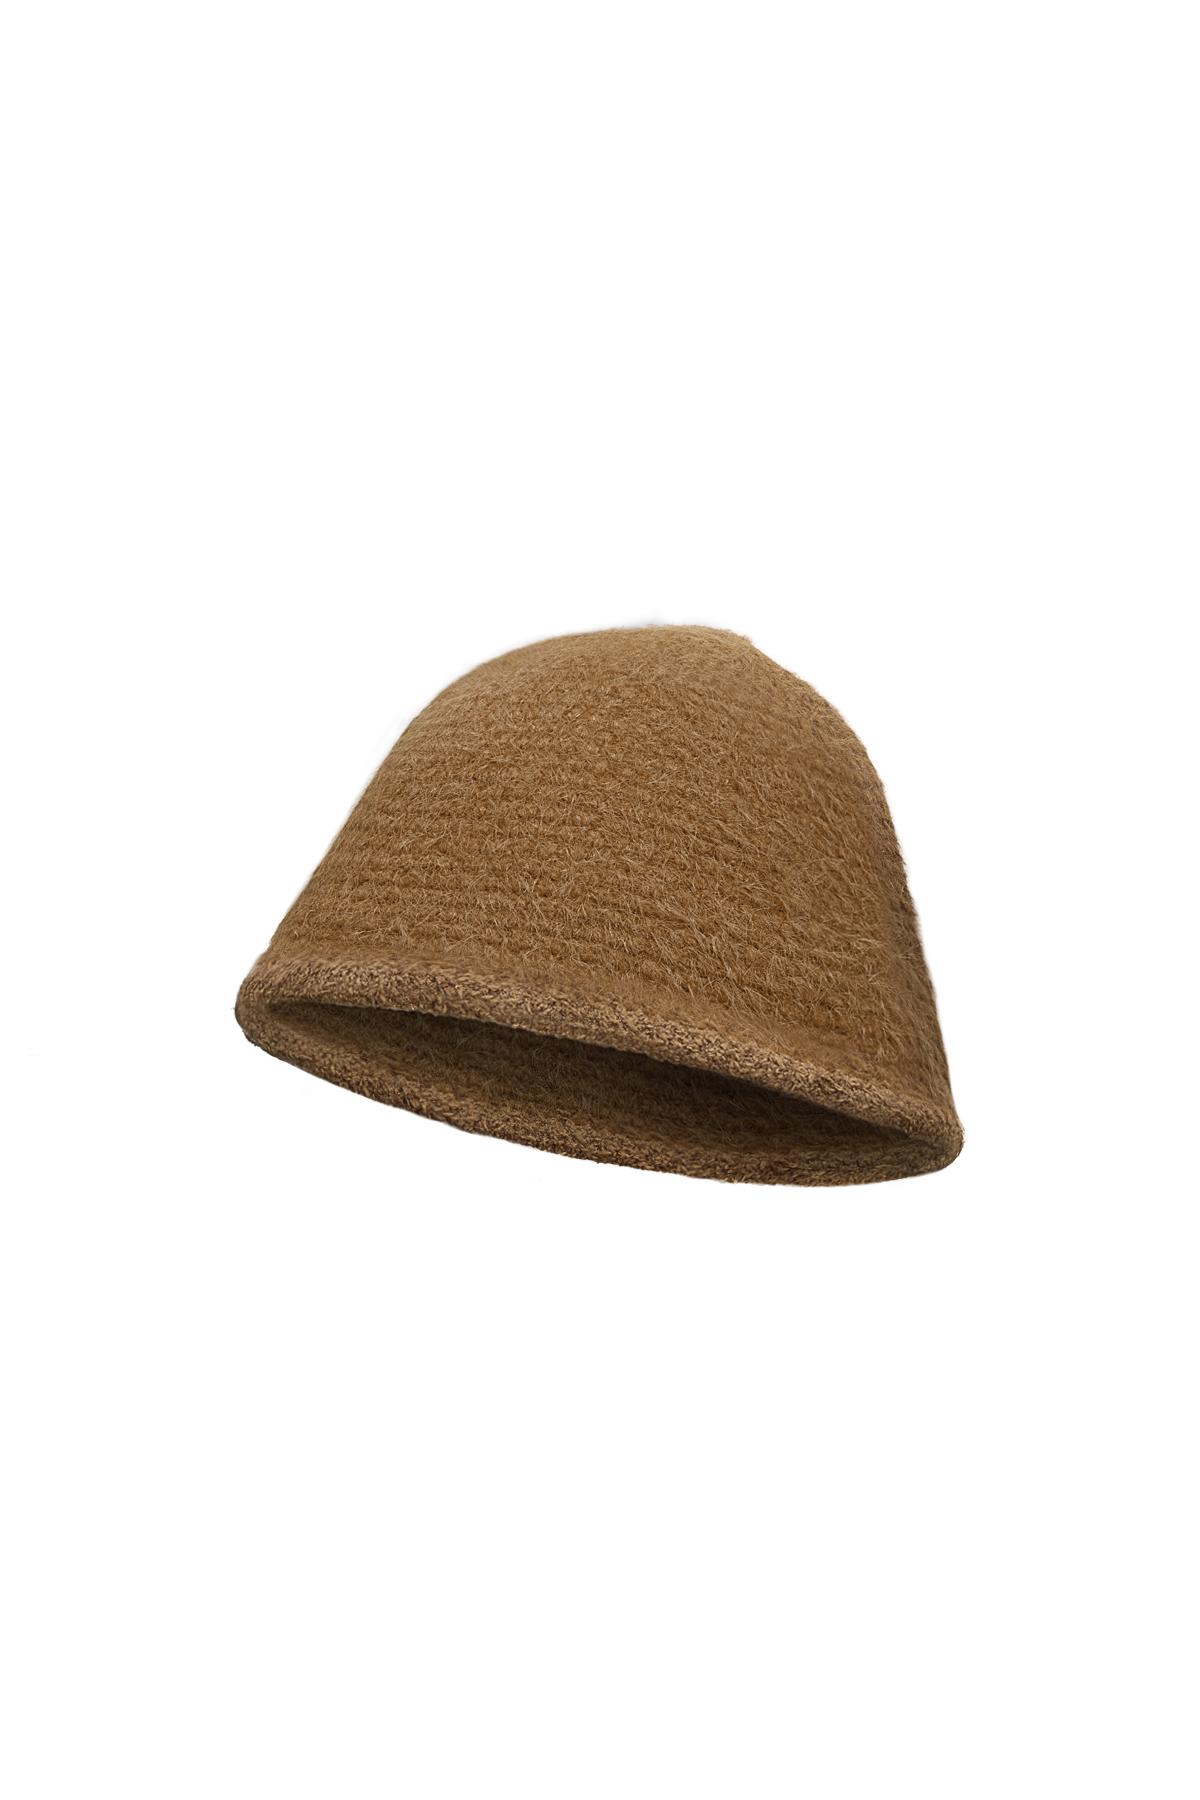 Fisherman's hat basic Camel Polyester 